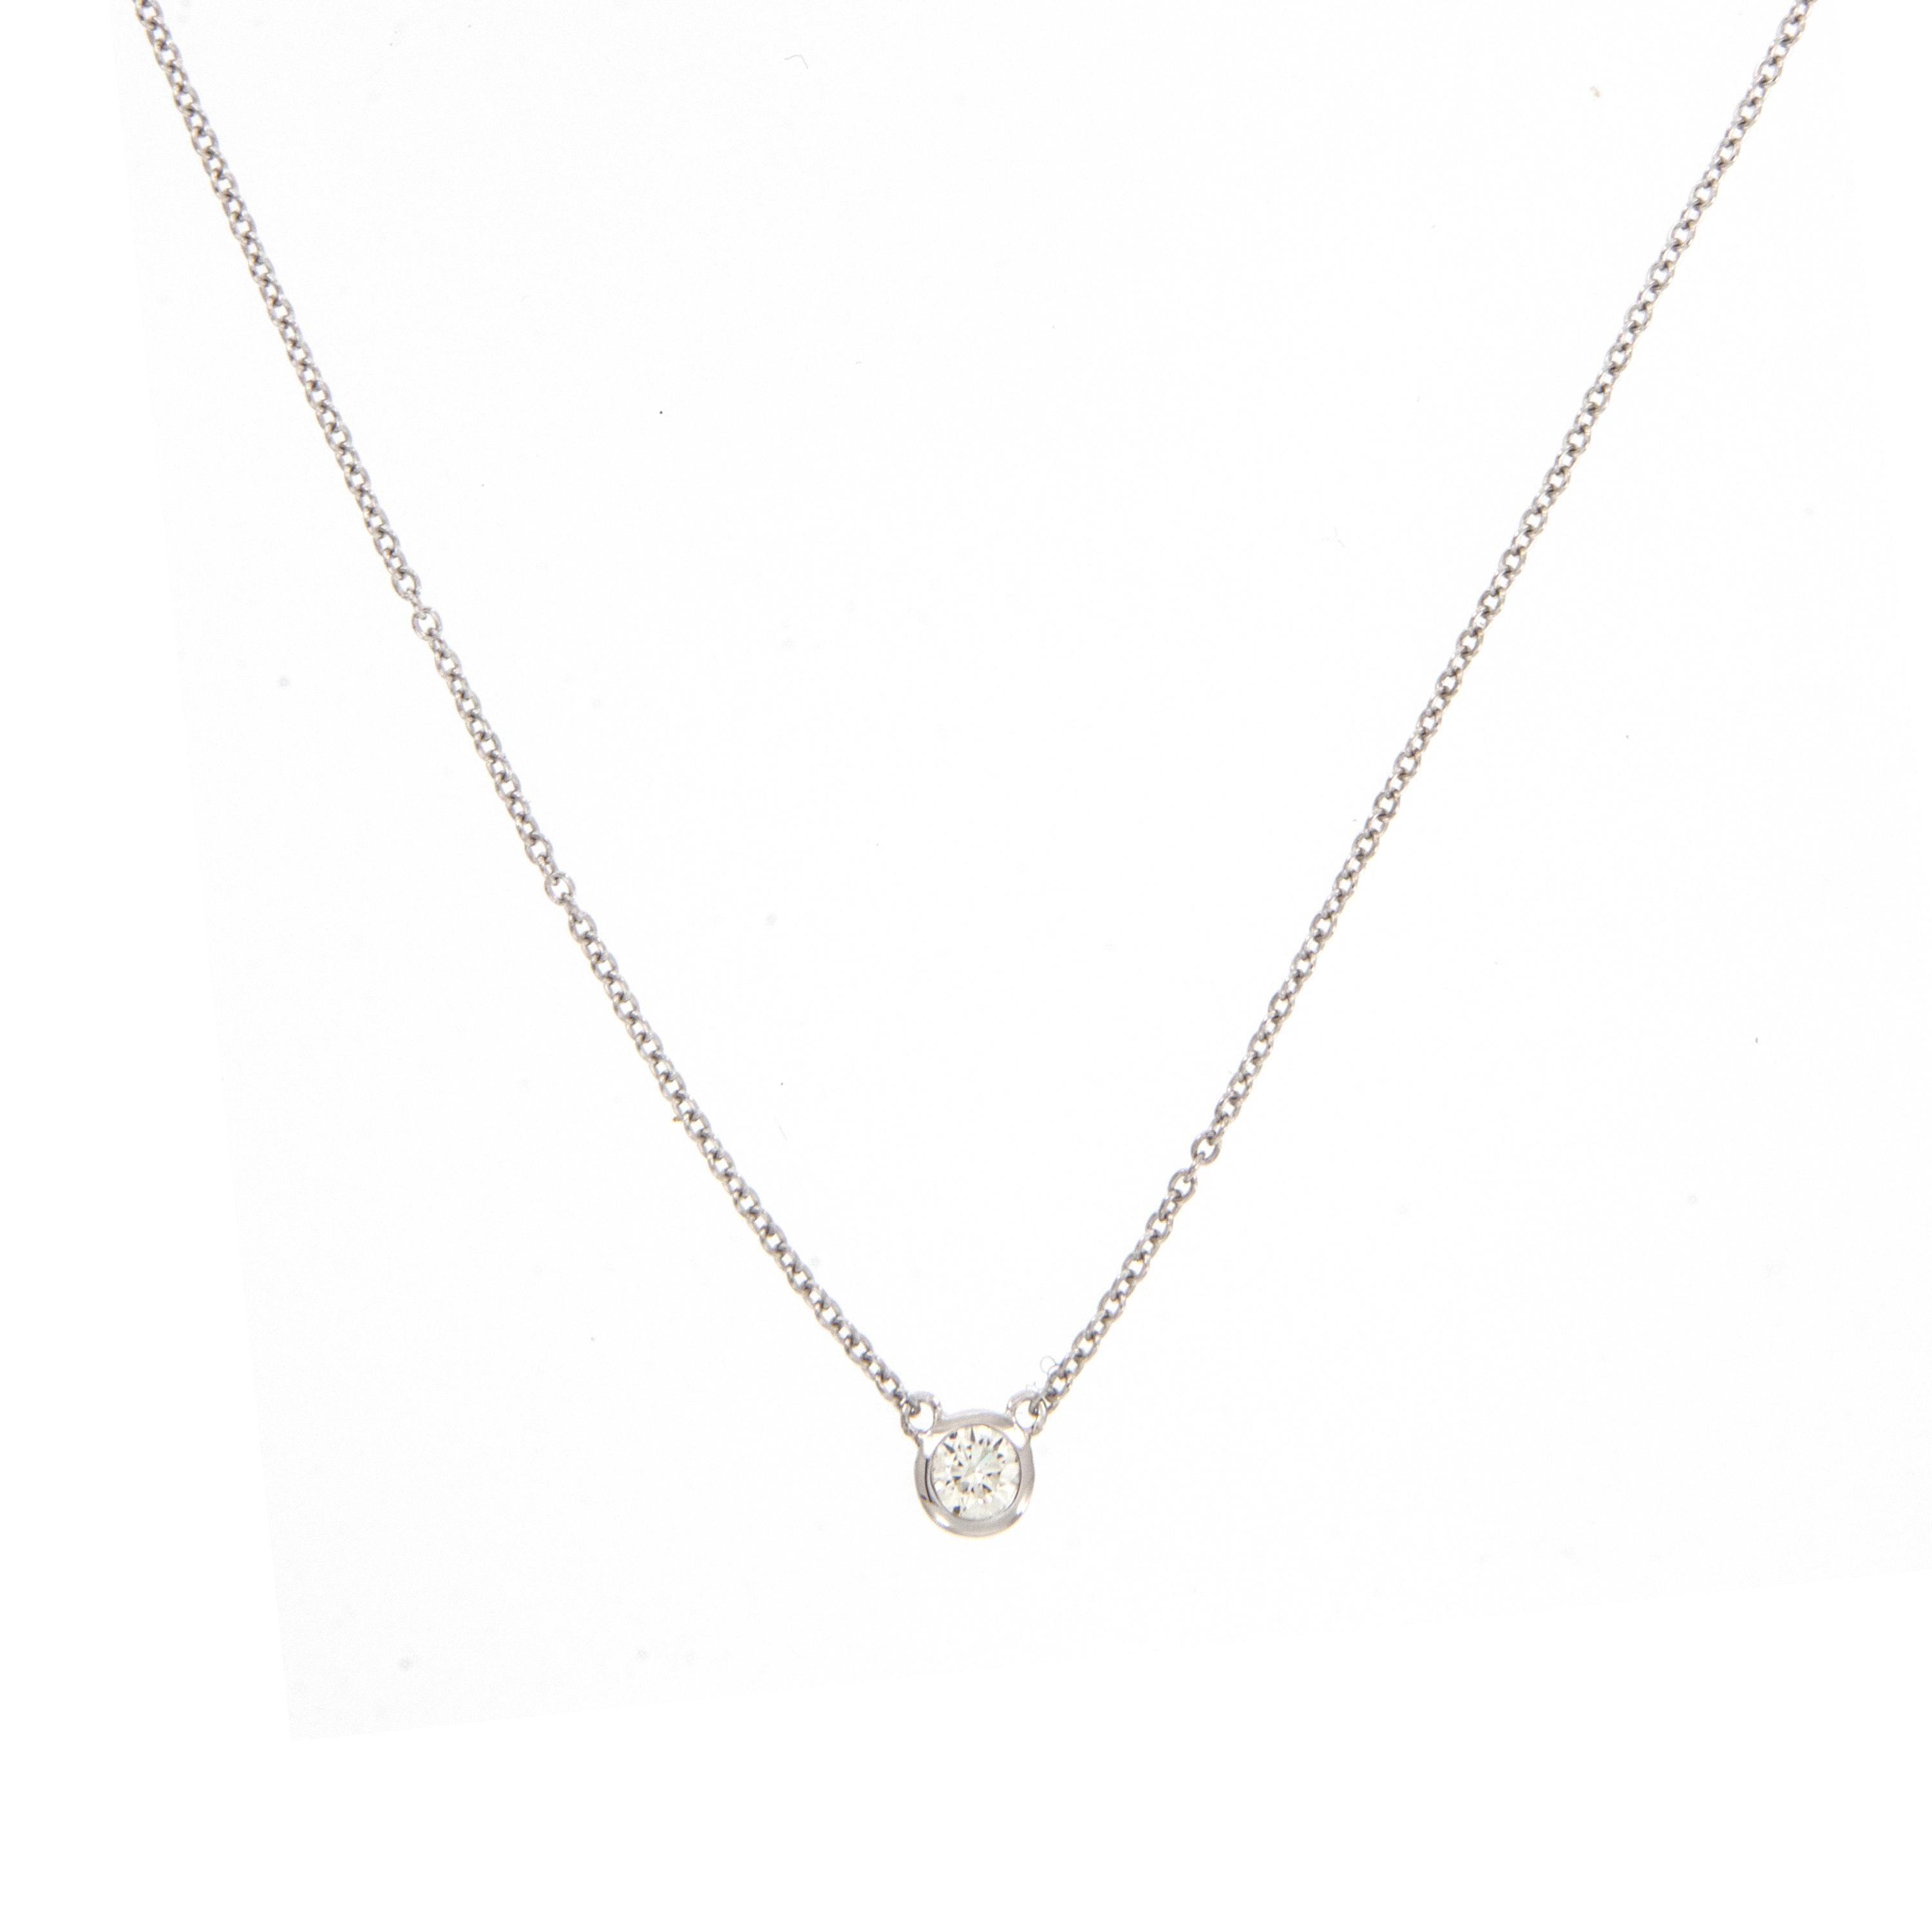 Contemporary 18 Karat White Gold 0.10 Carat Diamond Solitaire Necklace